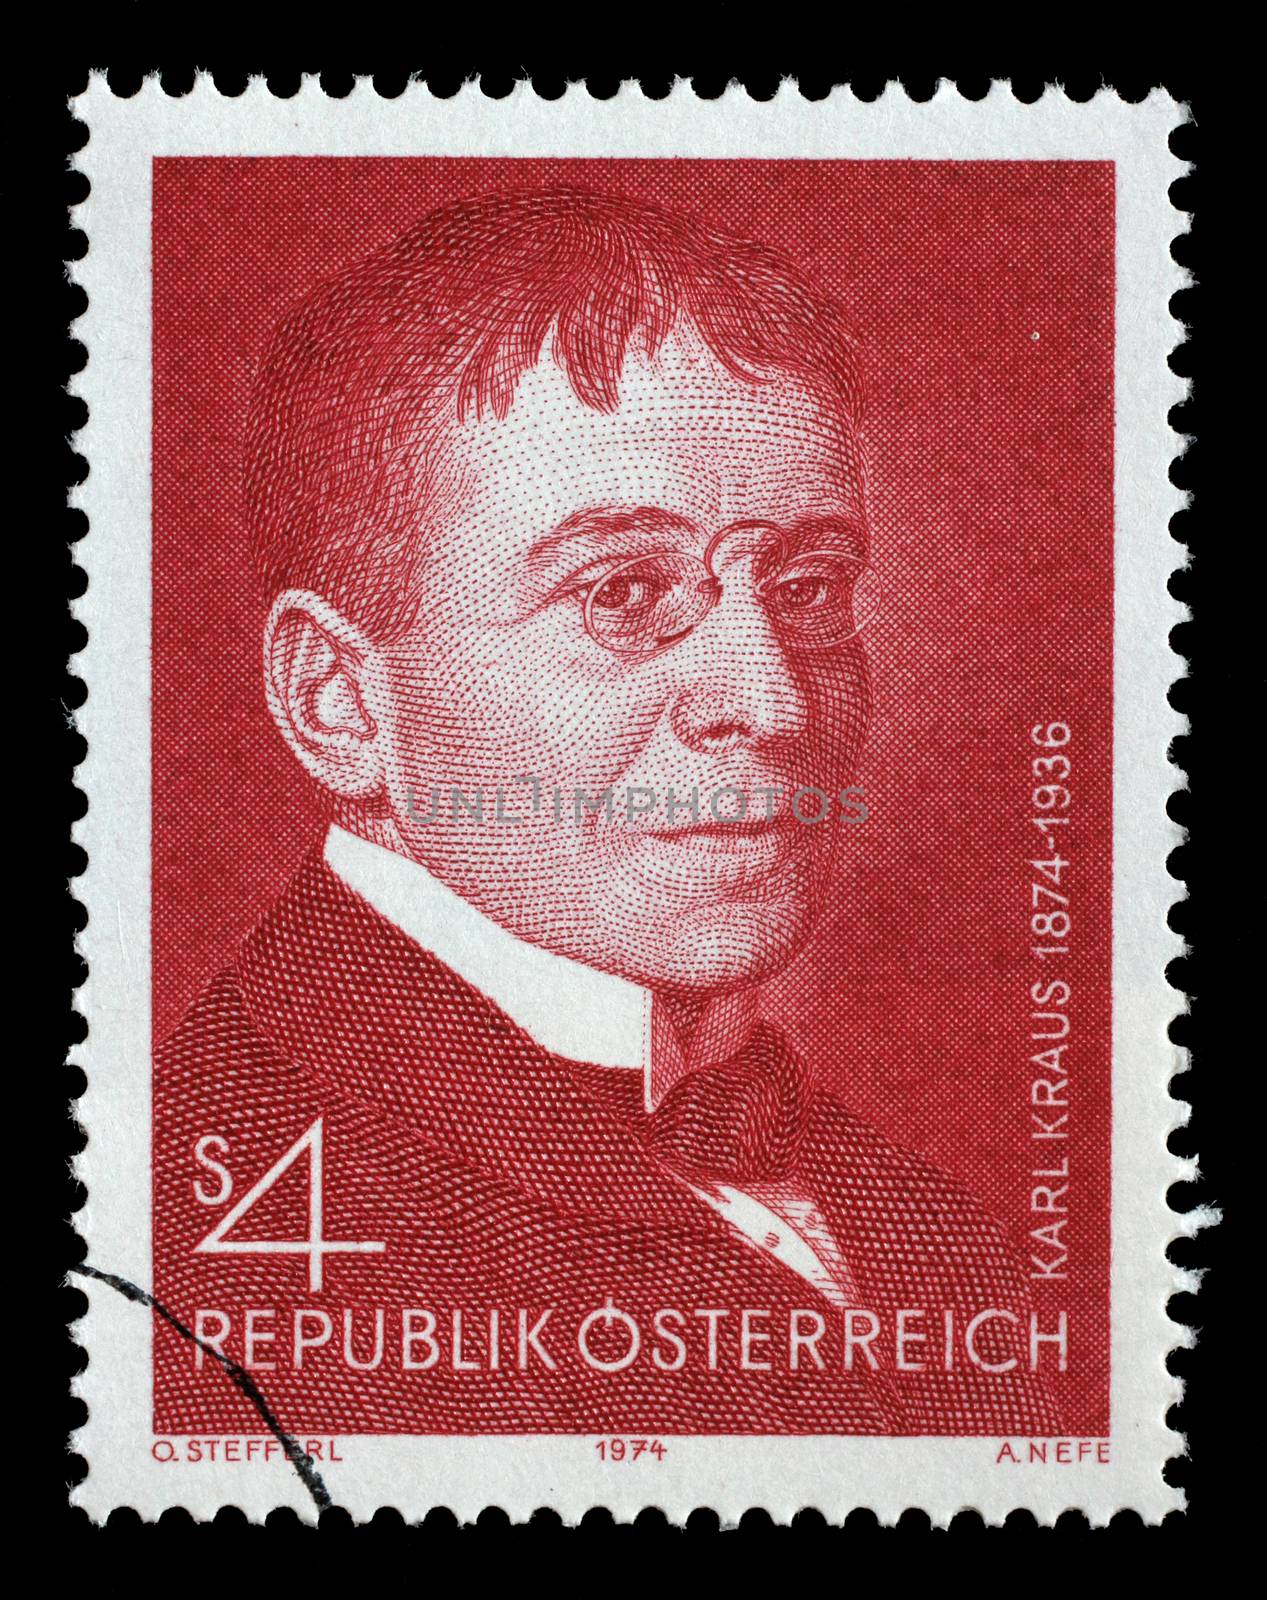 Stamp printed in the Austria shows Karl Kraus, Poet and Satirist by atlas